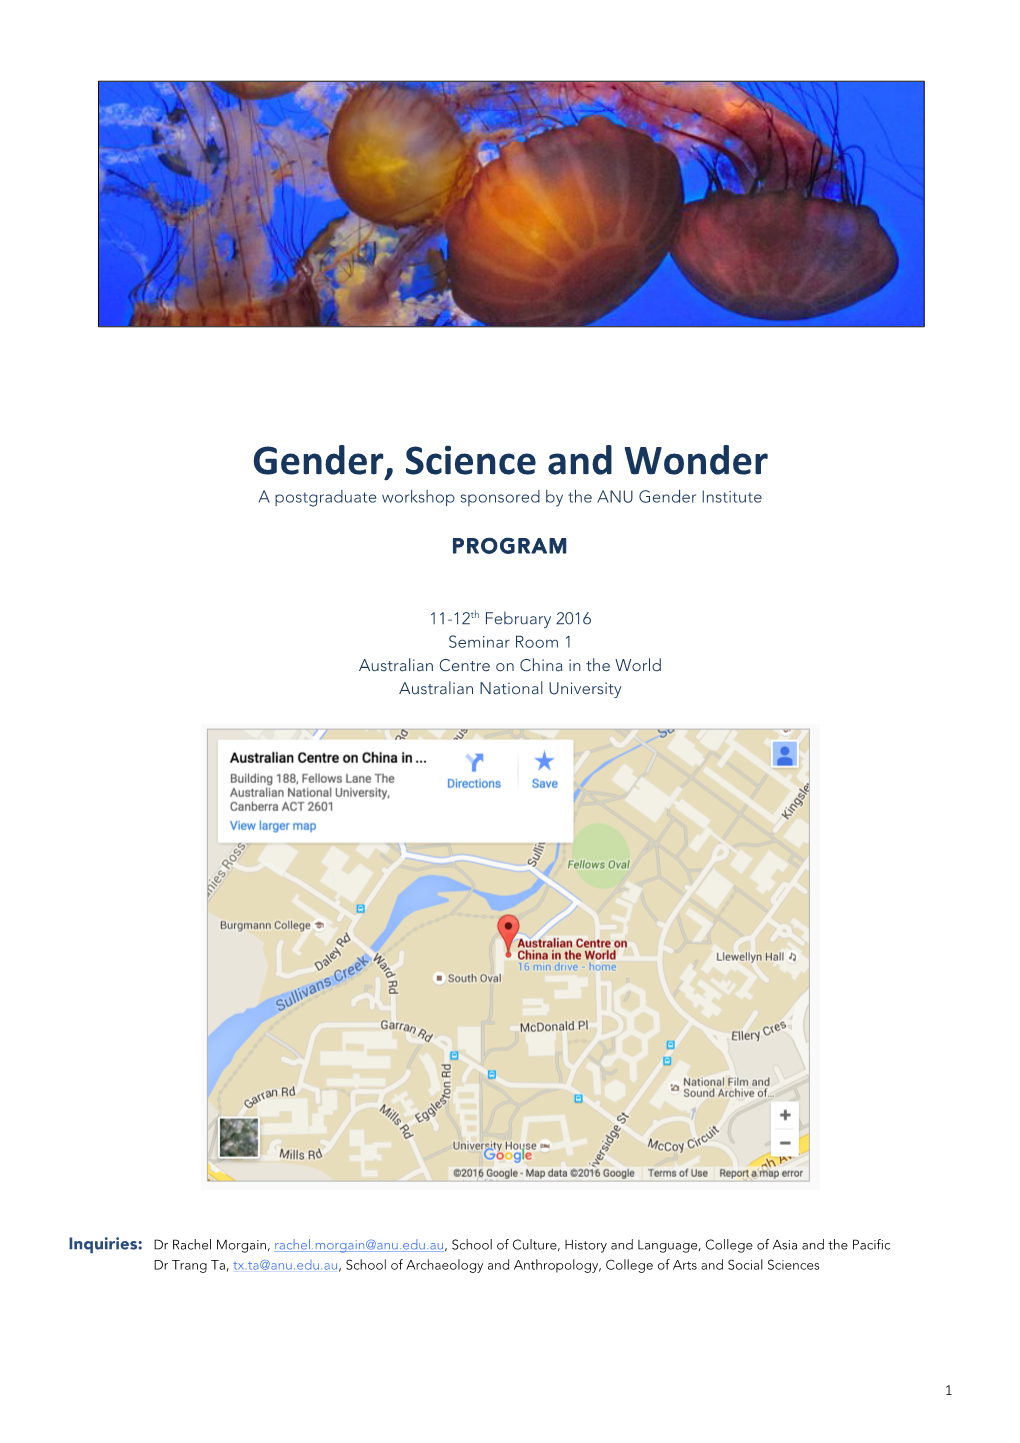 Gender Science Wonder Program 2 February